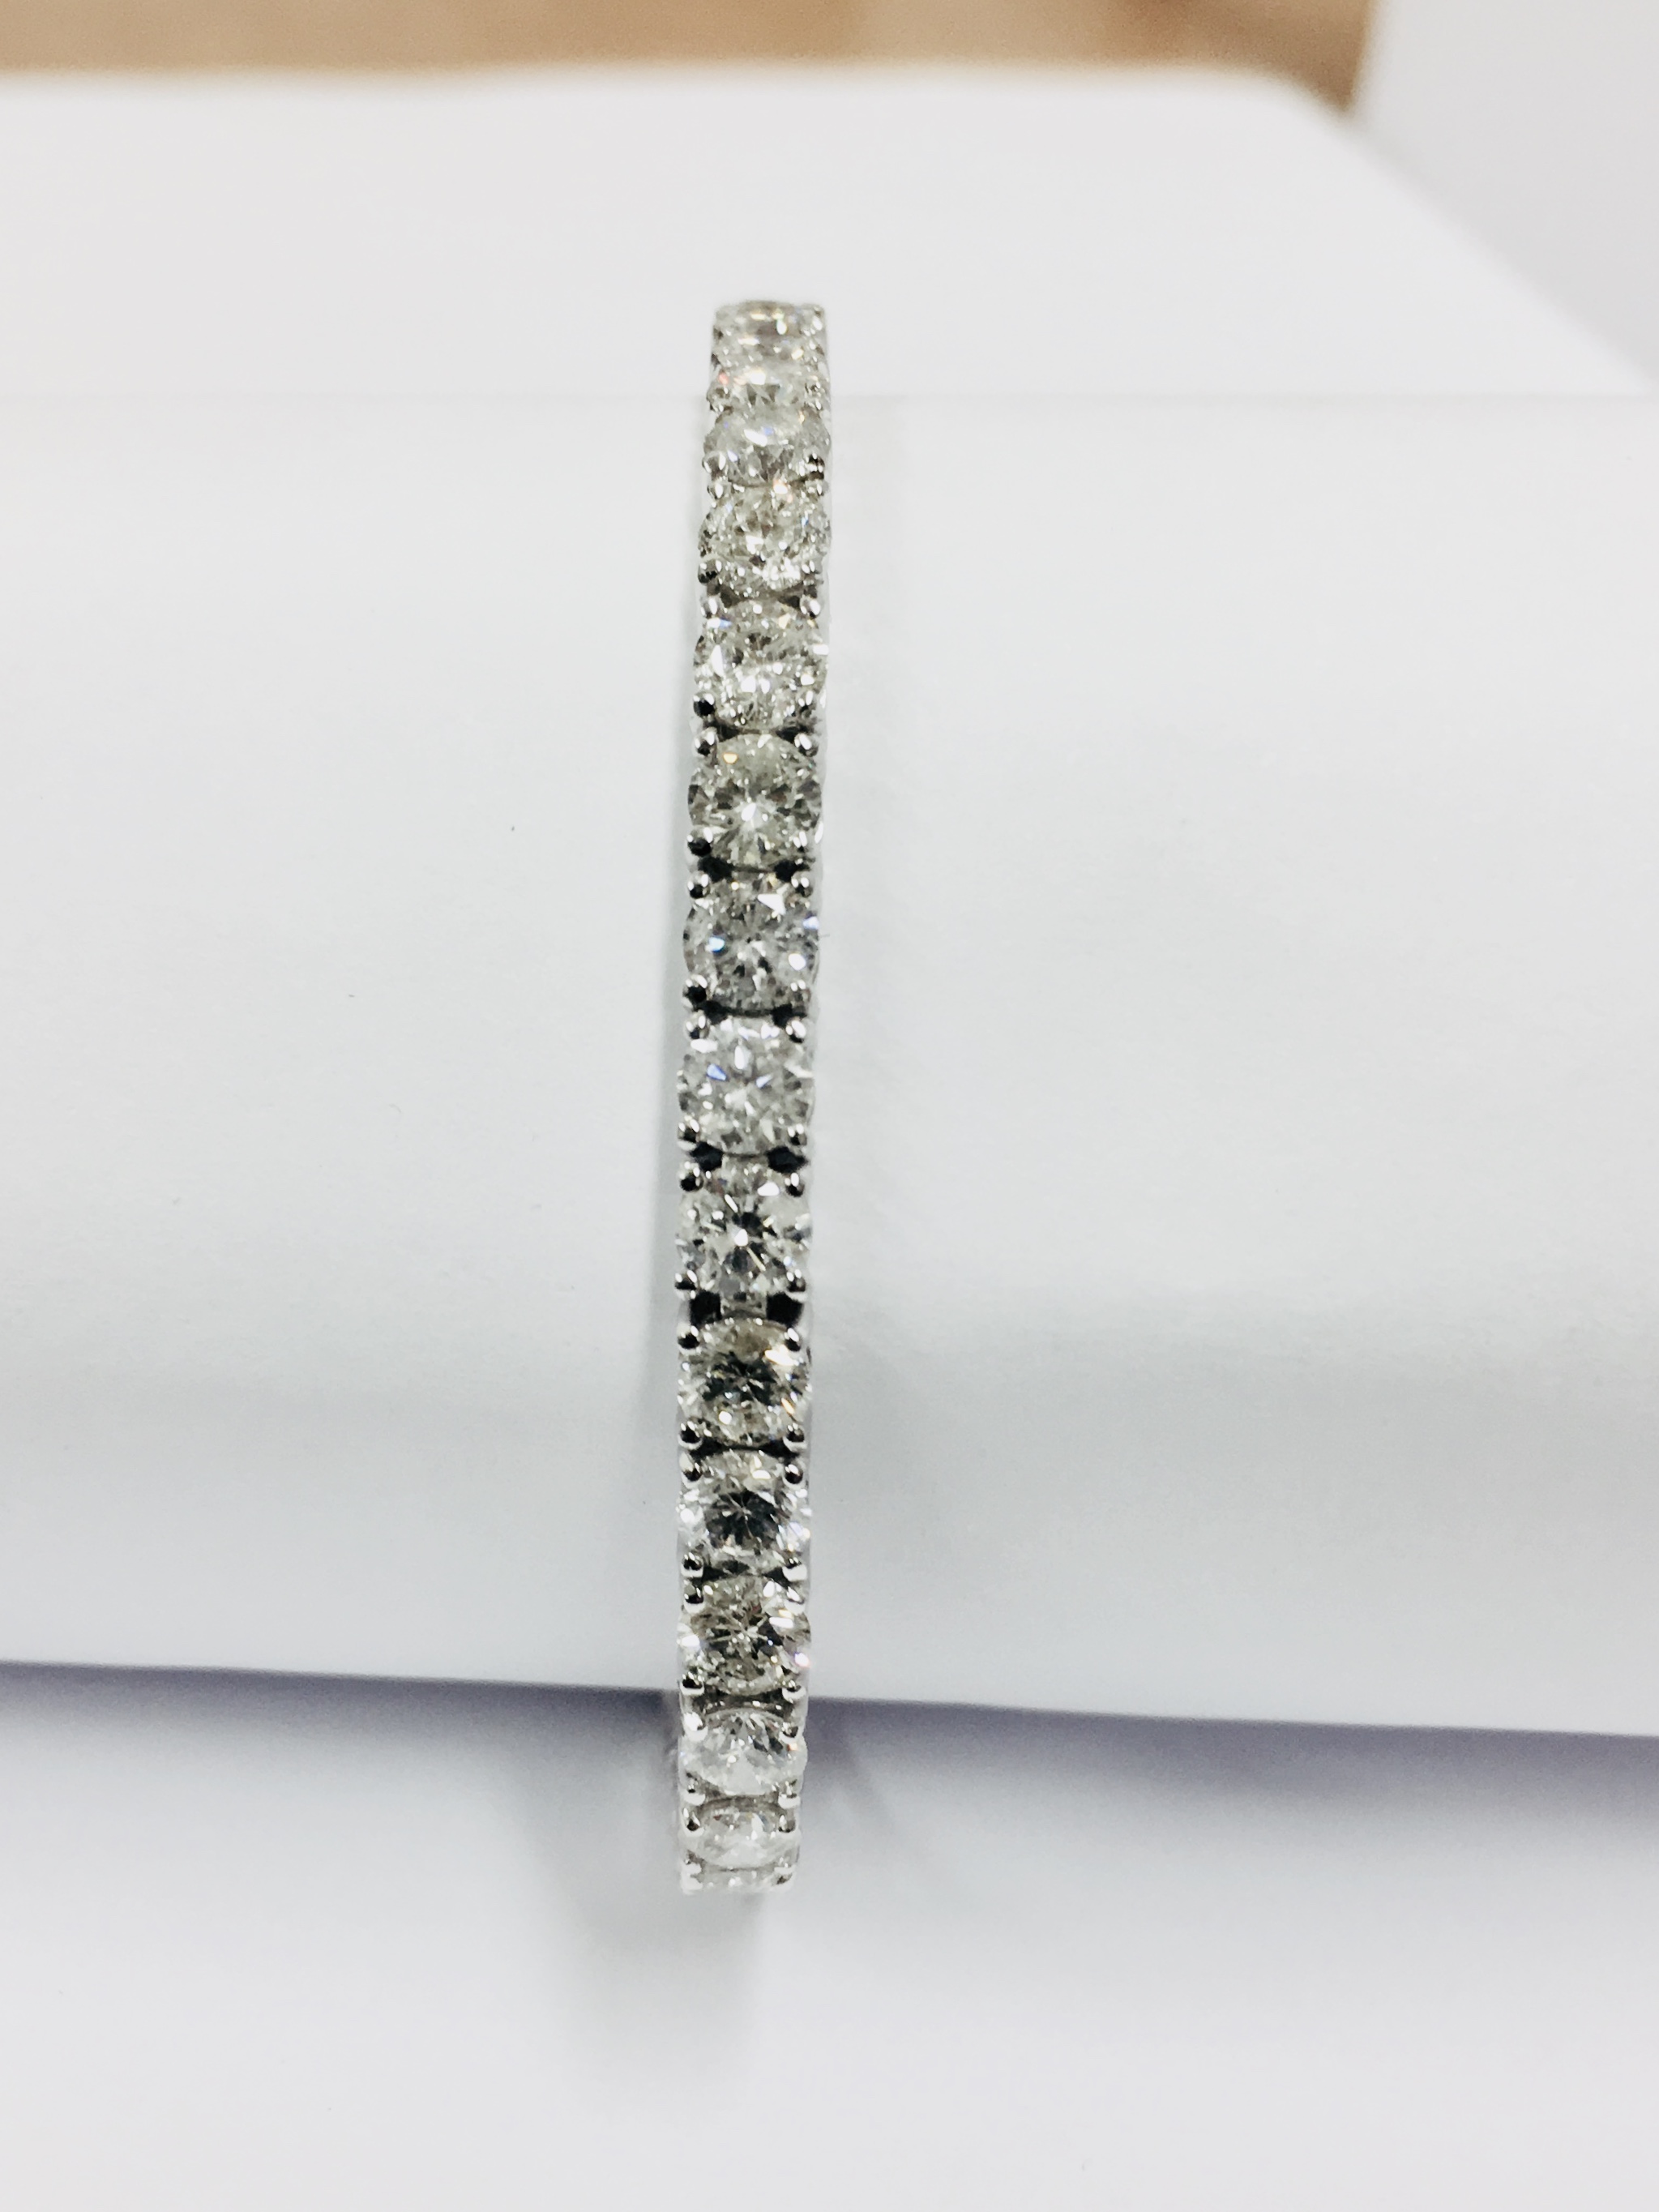 8.00ct Diamond tennis bracelet set with brilliant cut diamonds of G colour - Image 14 of 42